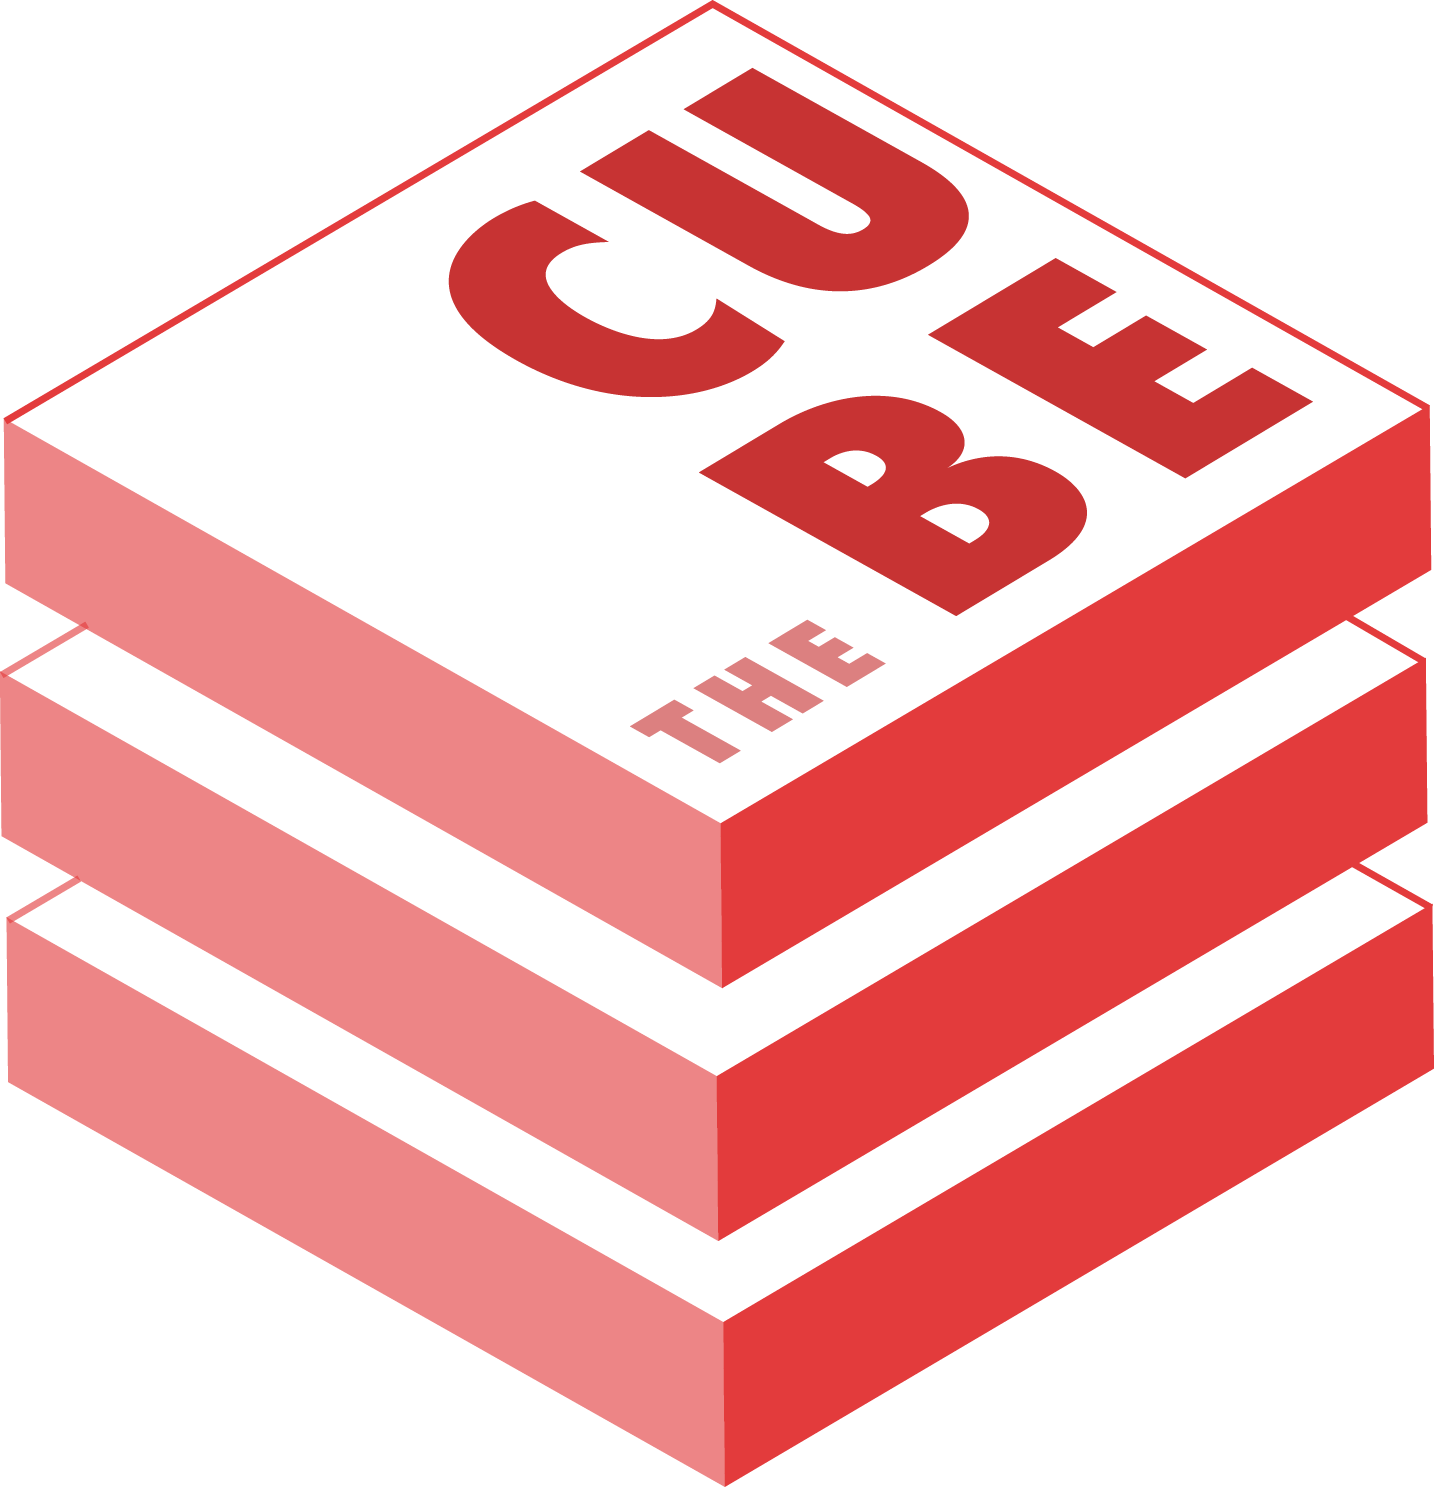 The EUS Cube Logo